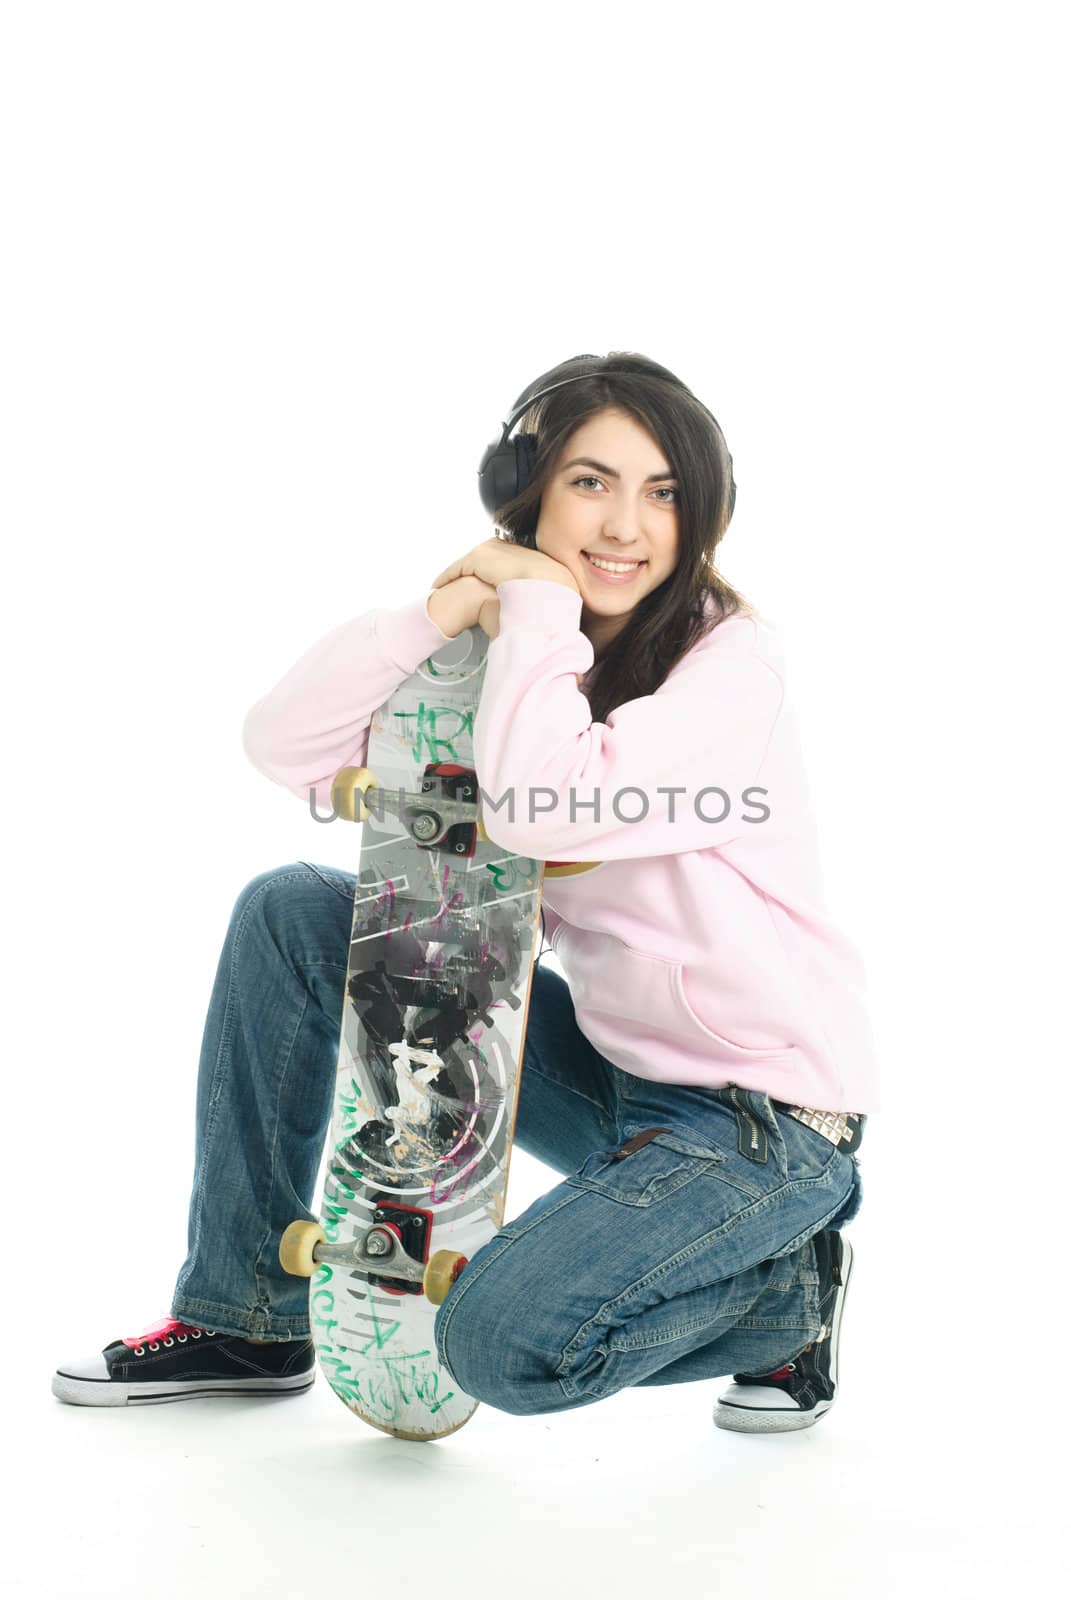 happy teenage girl wearing earphones and holding a skate board